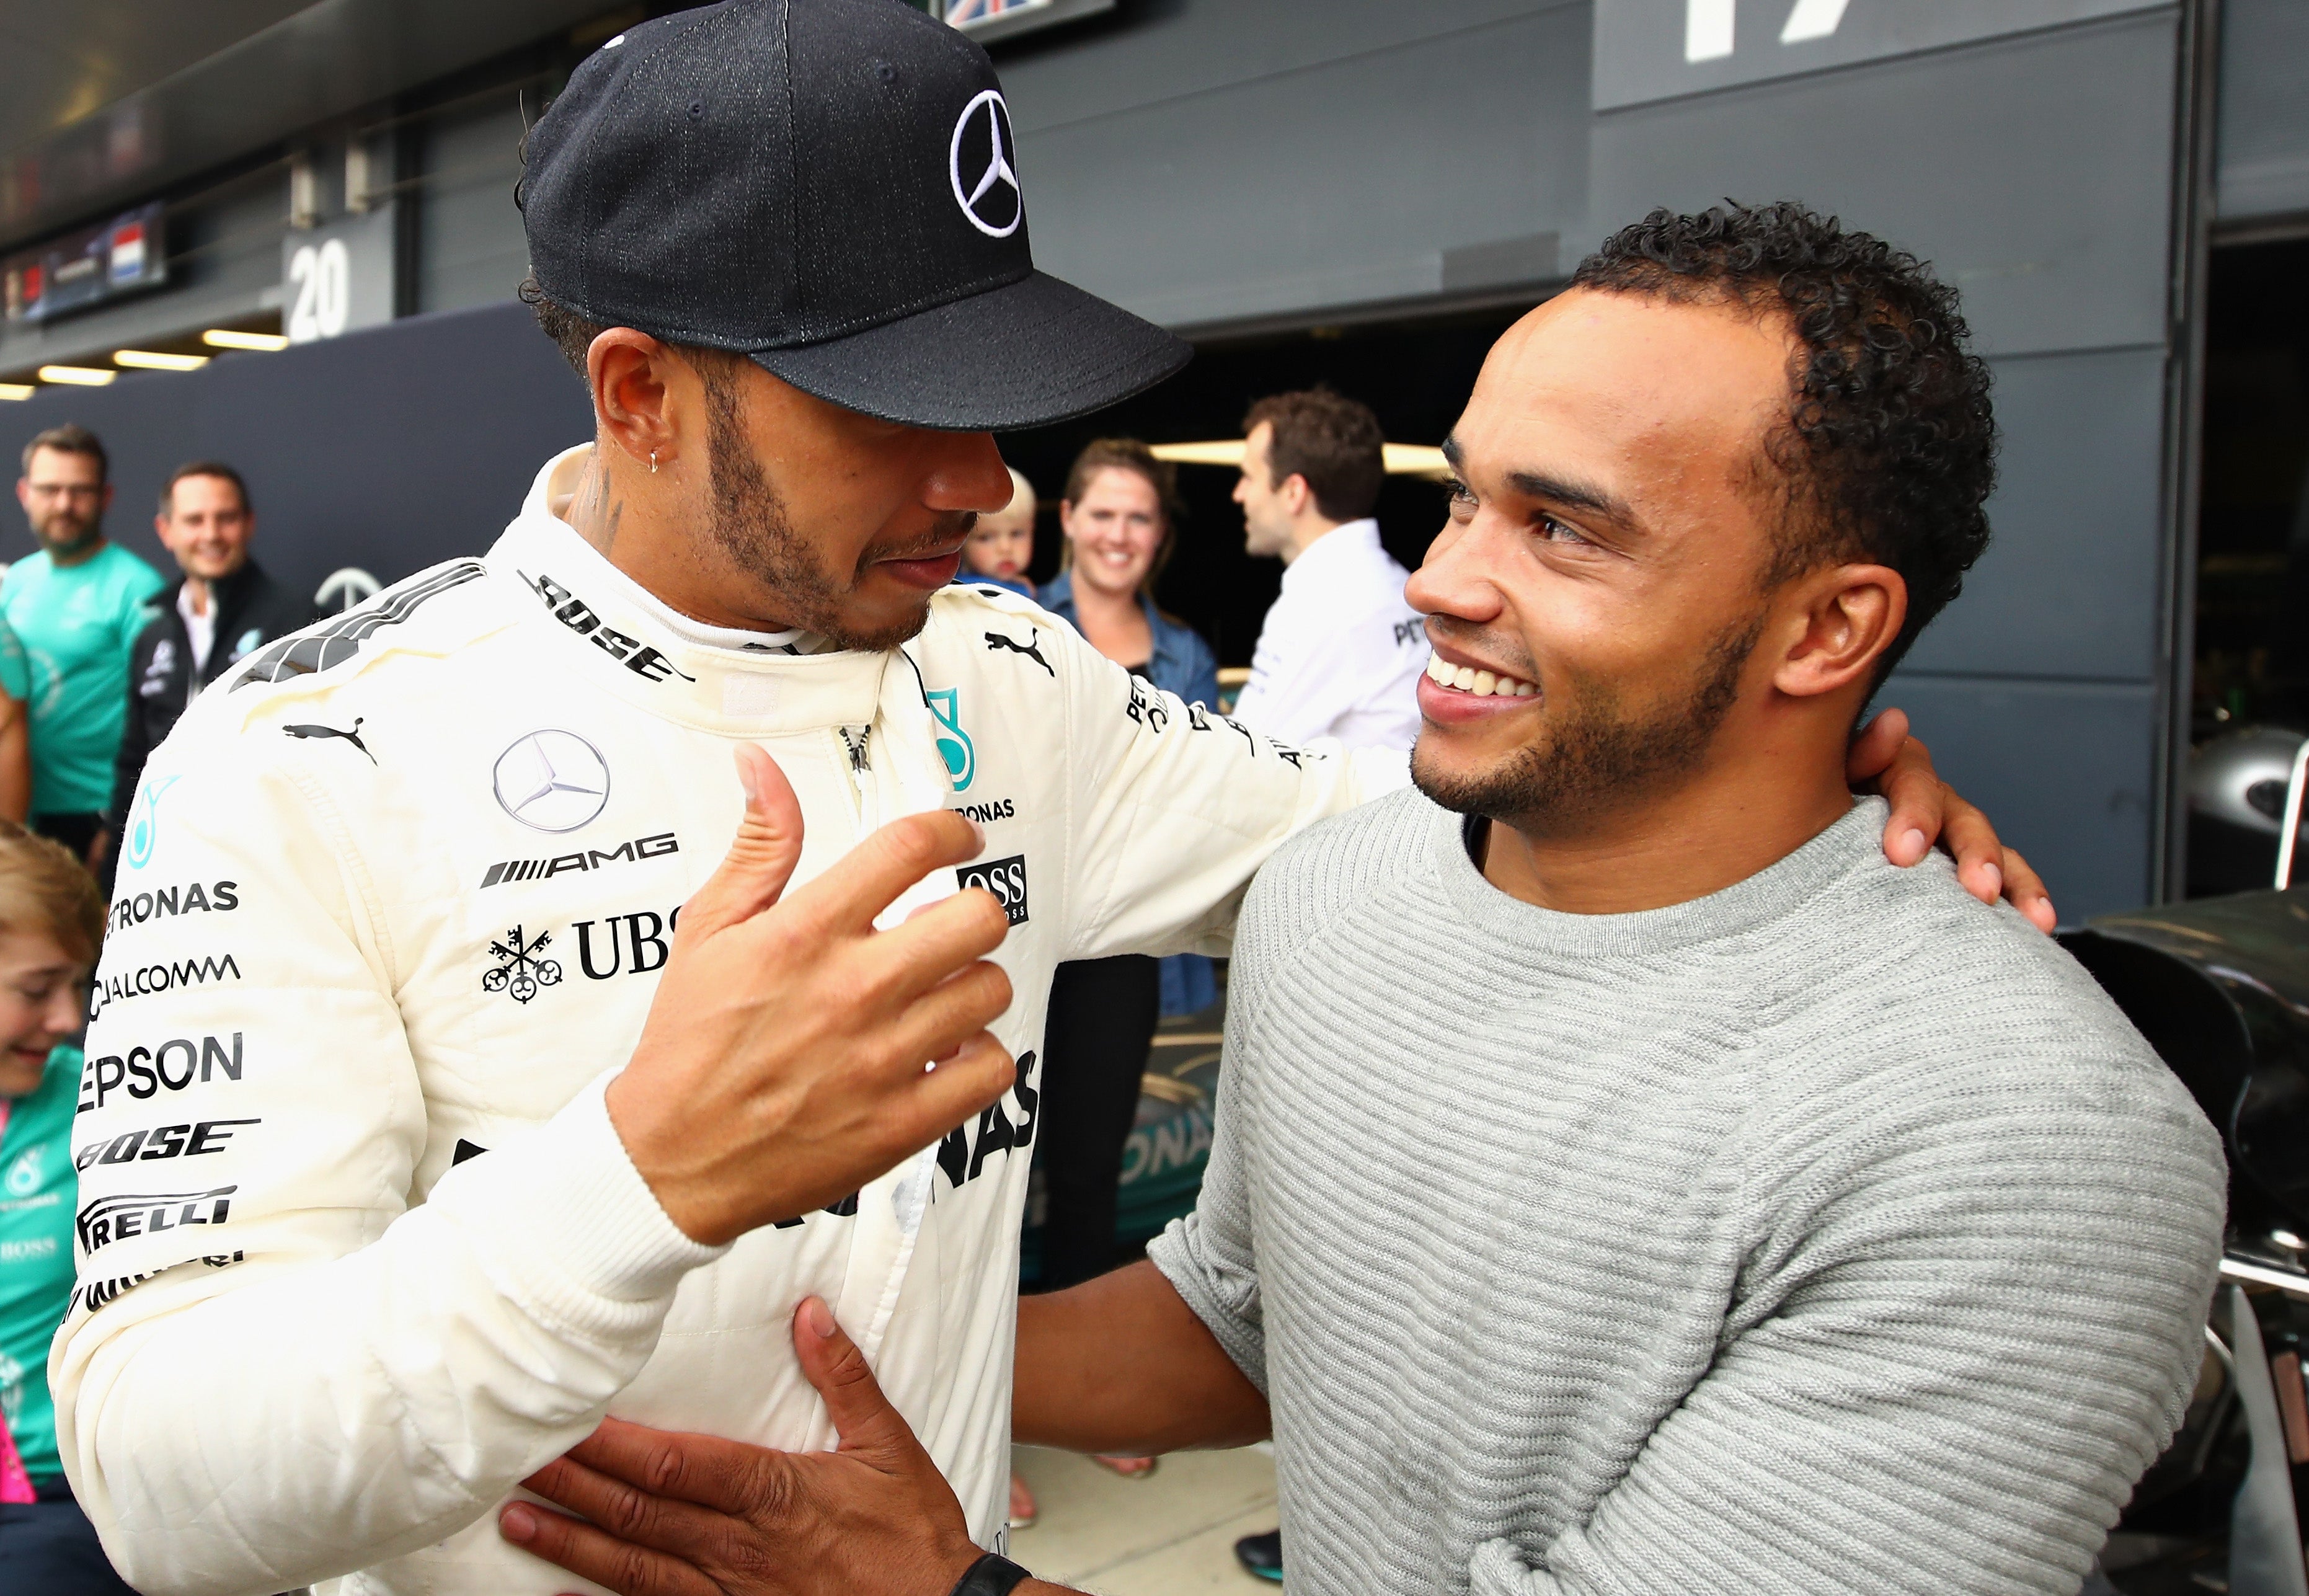 Lewis Hamilton told his half-brother Nicolas over the phone about his Ferrari move